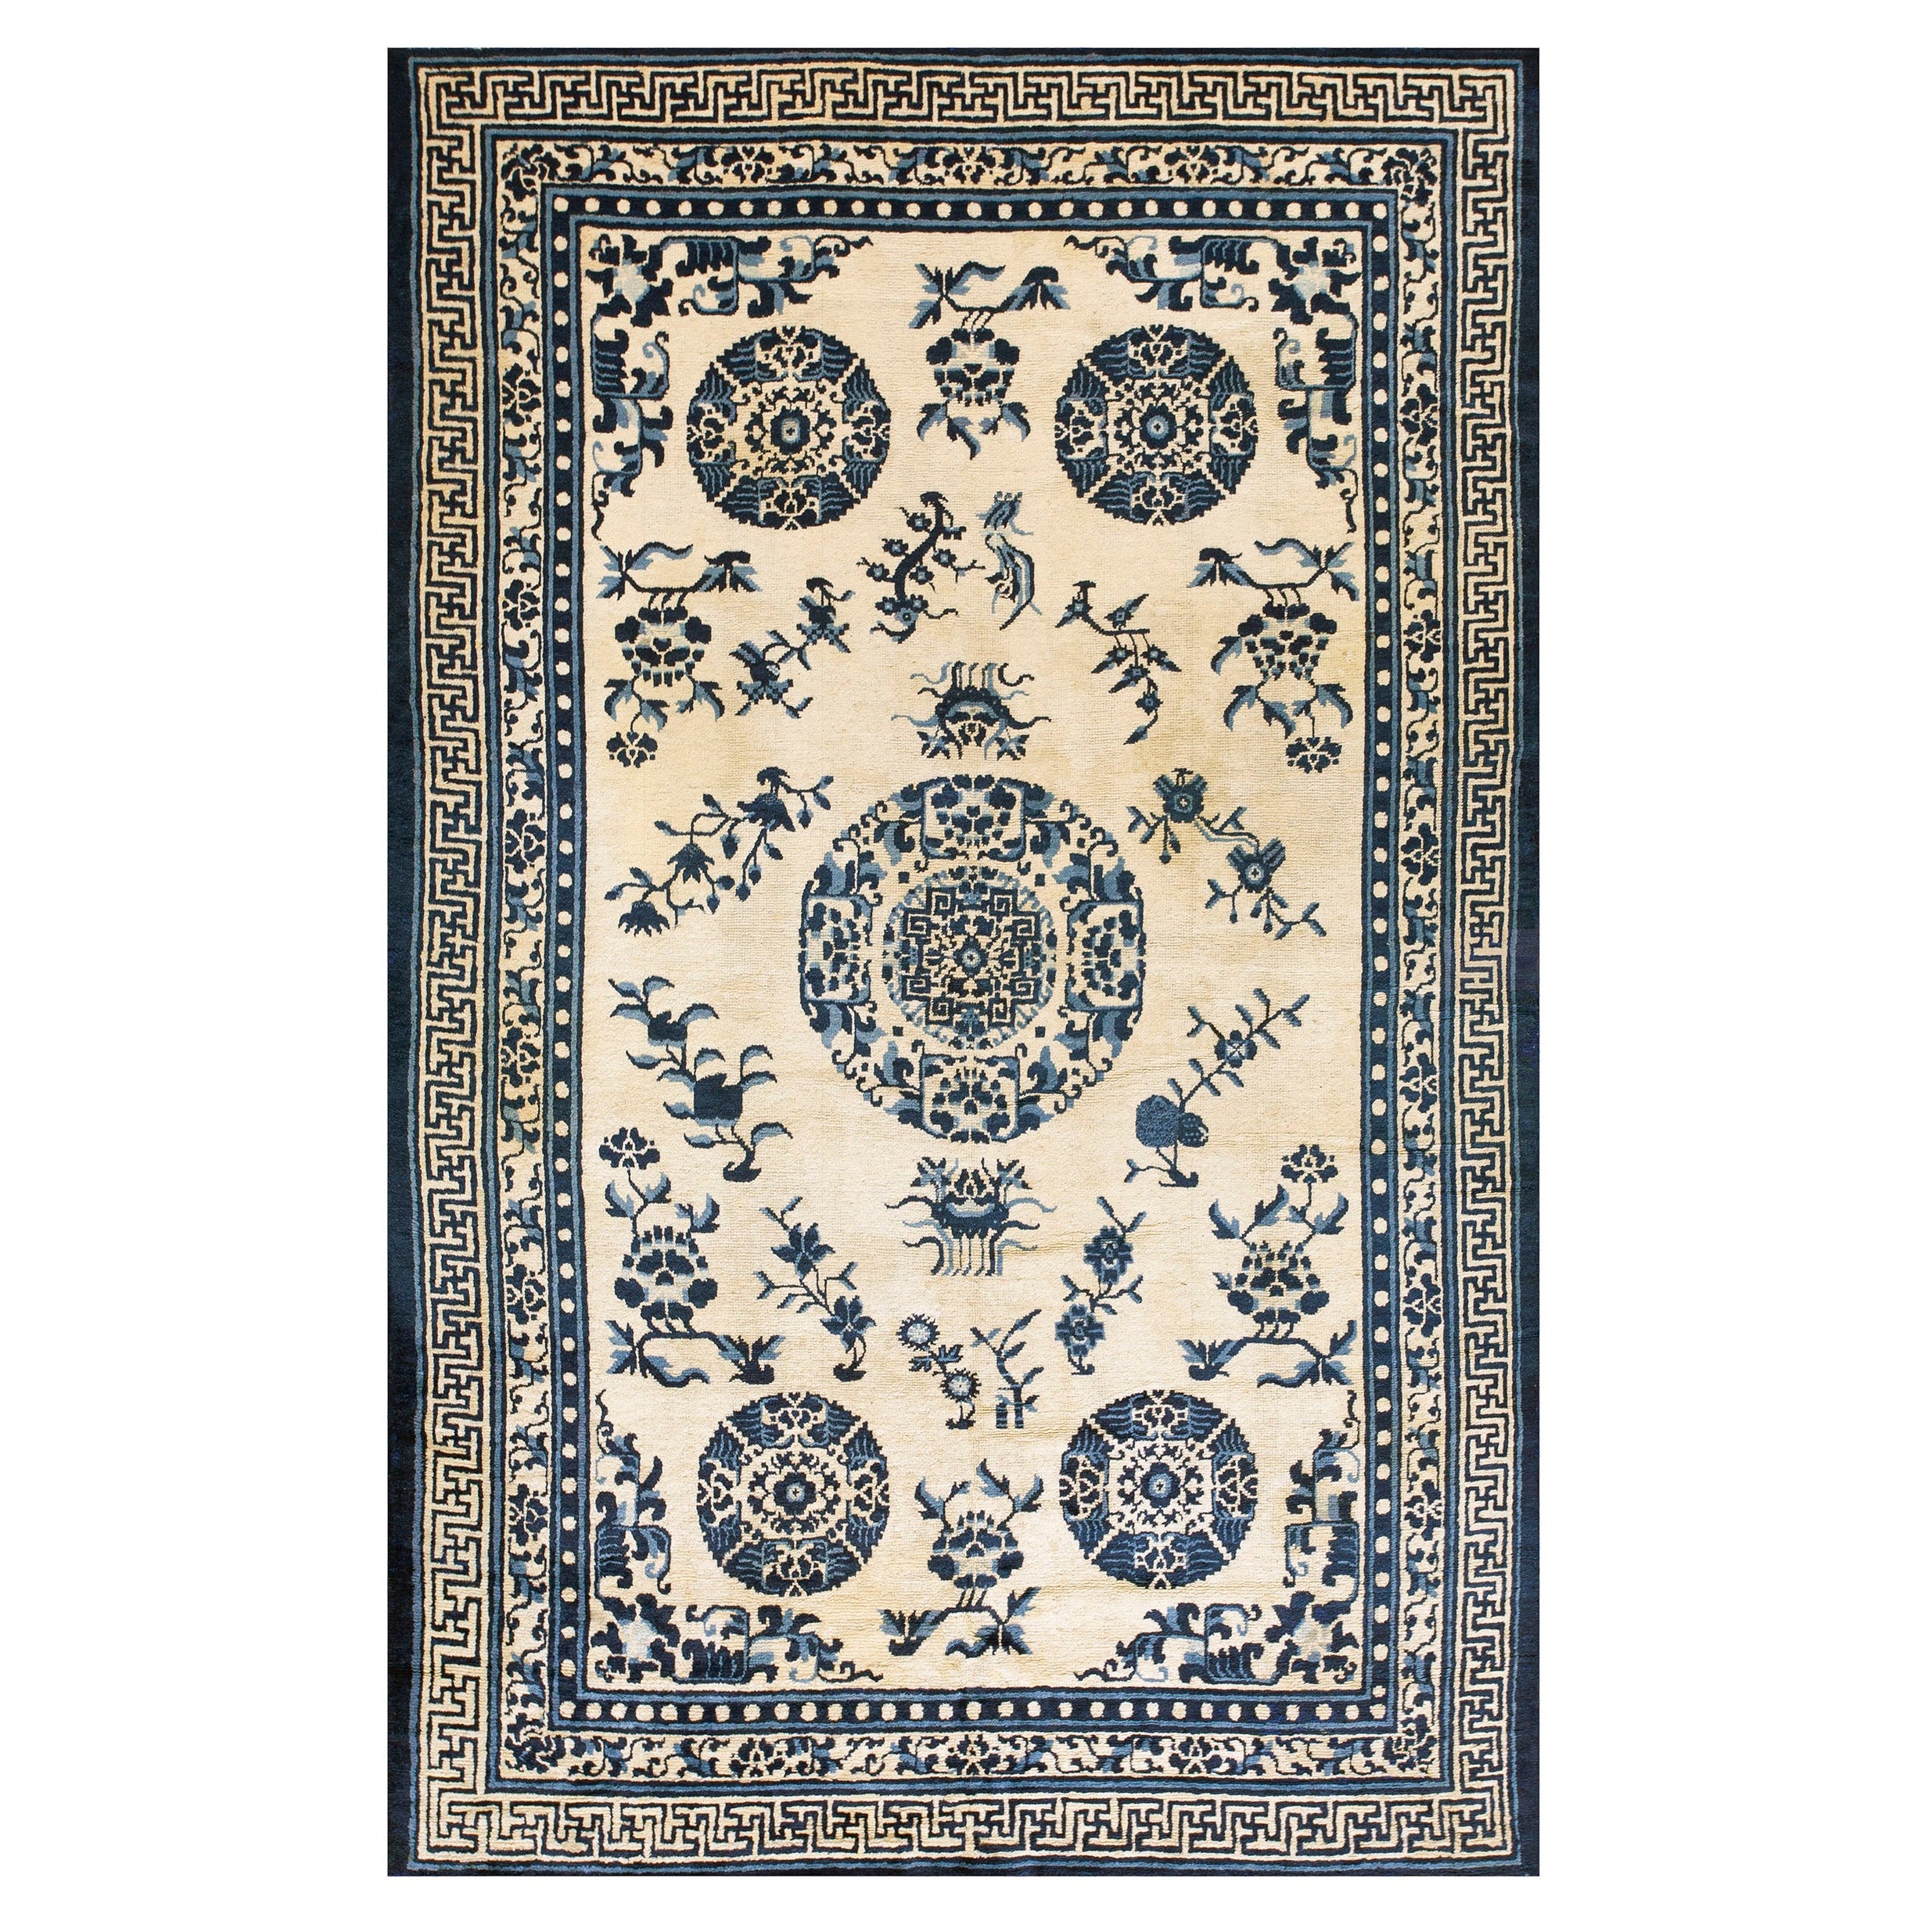 Mid 19th Century Chinese Ningxia Carpet ( 5'9" x 9'2" - 175 x 280 )